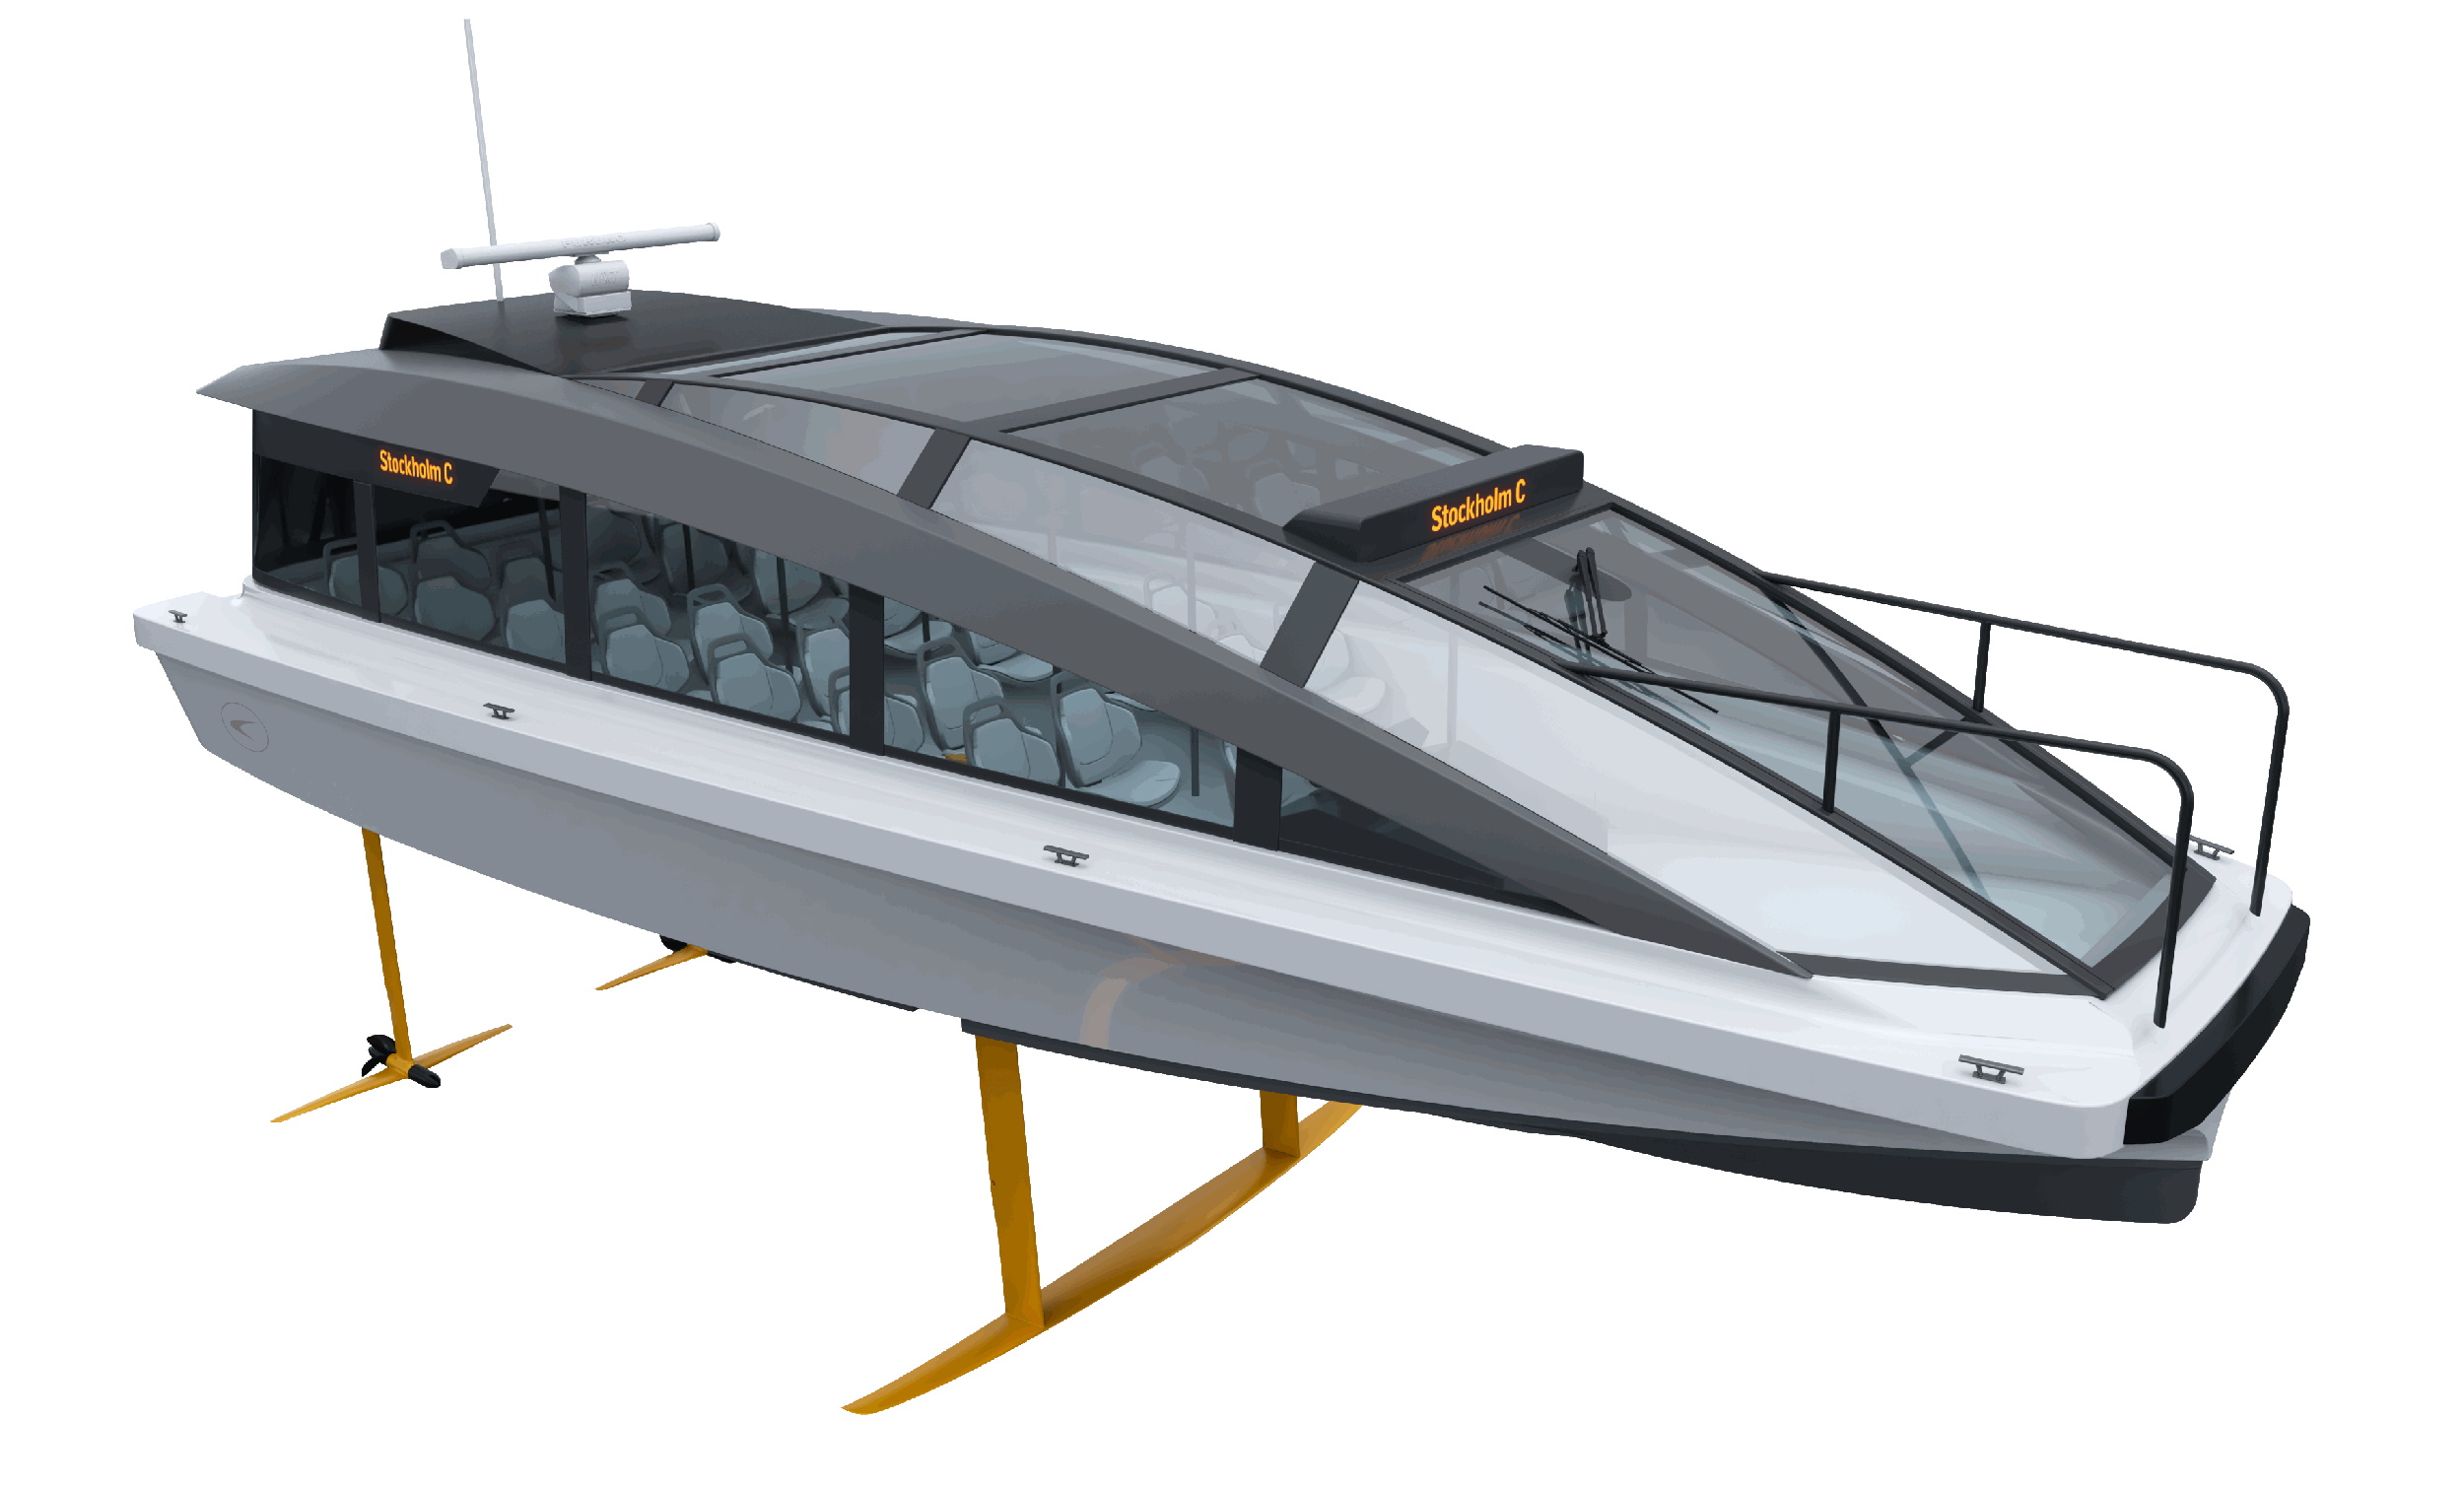 3D model of Candela's P-30 passenger boat.